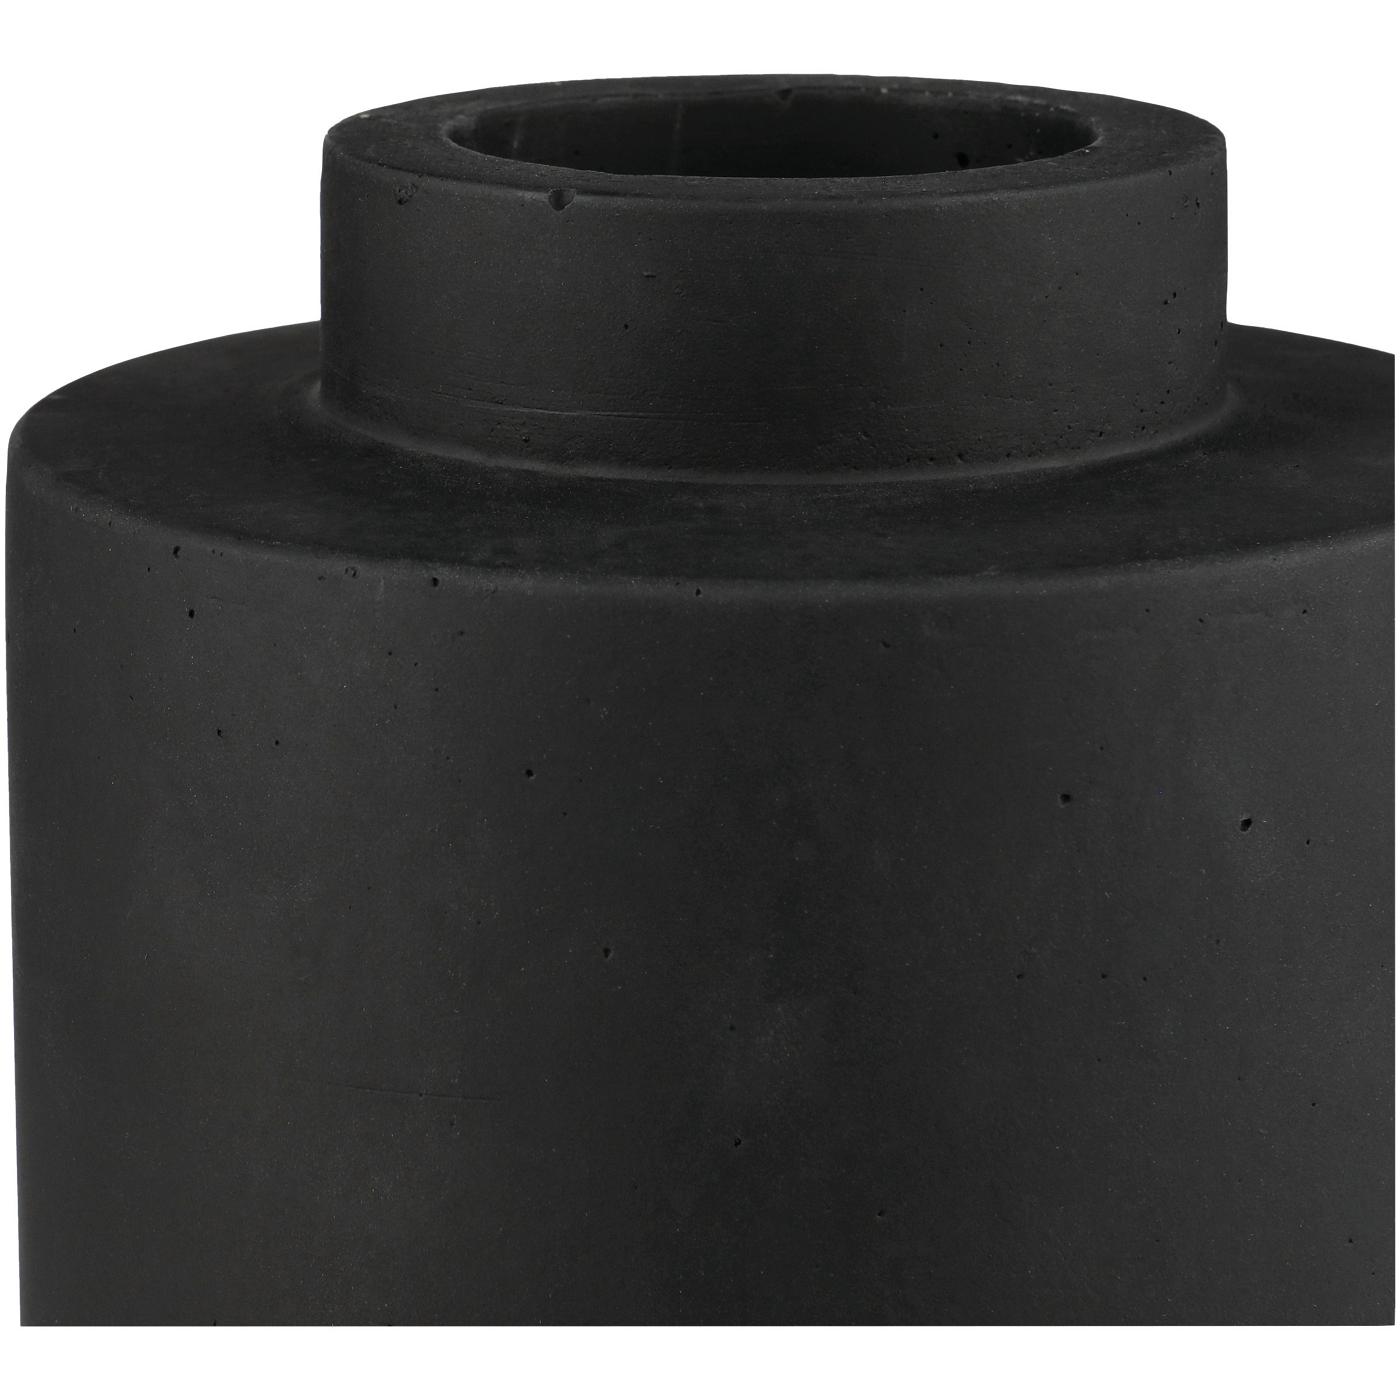 Haven + Key Decorative Ceramic Vase – Black; image 2 of 2